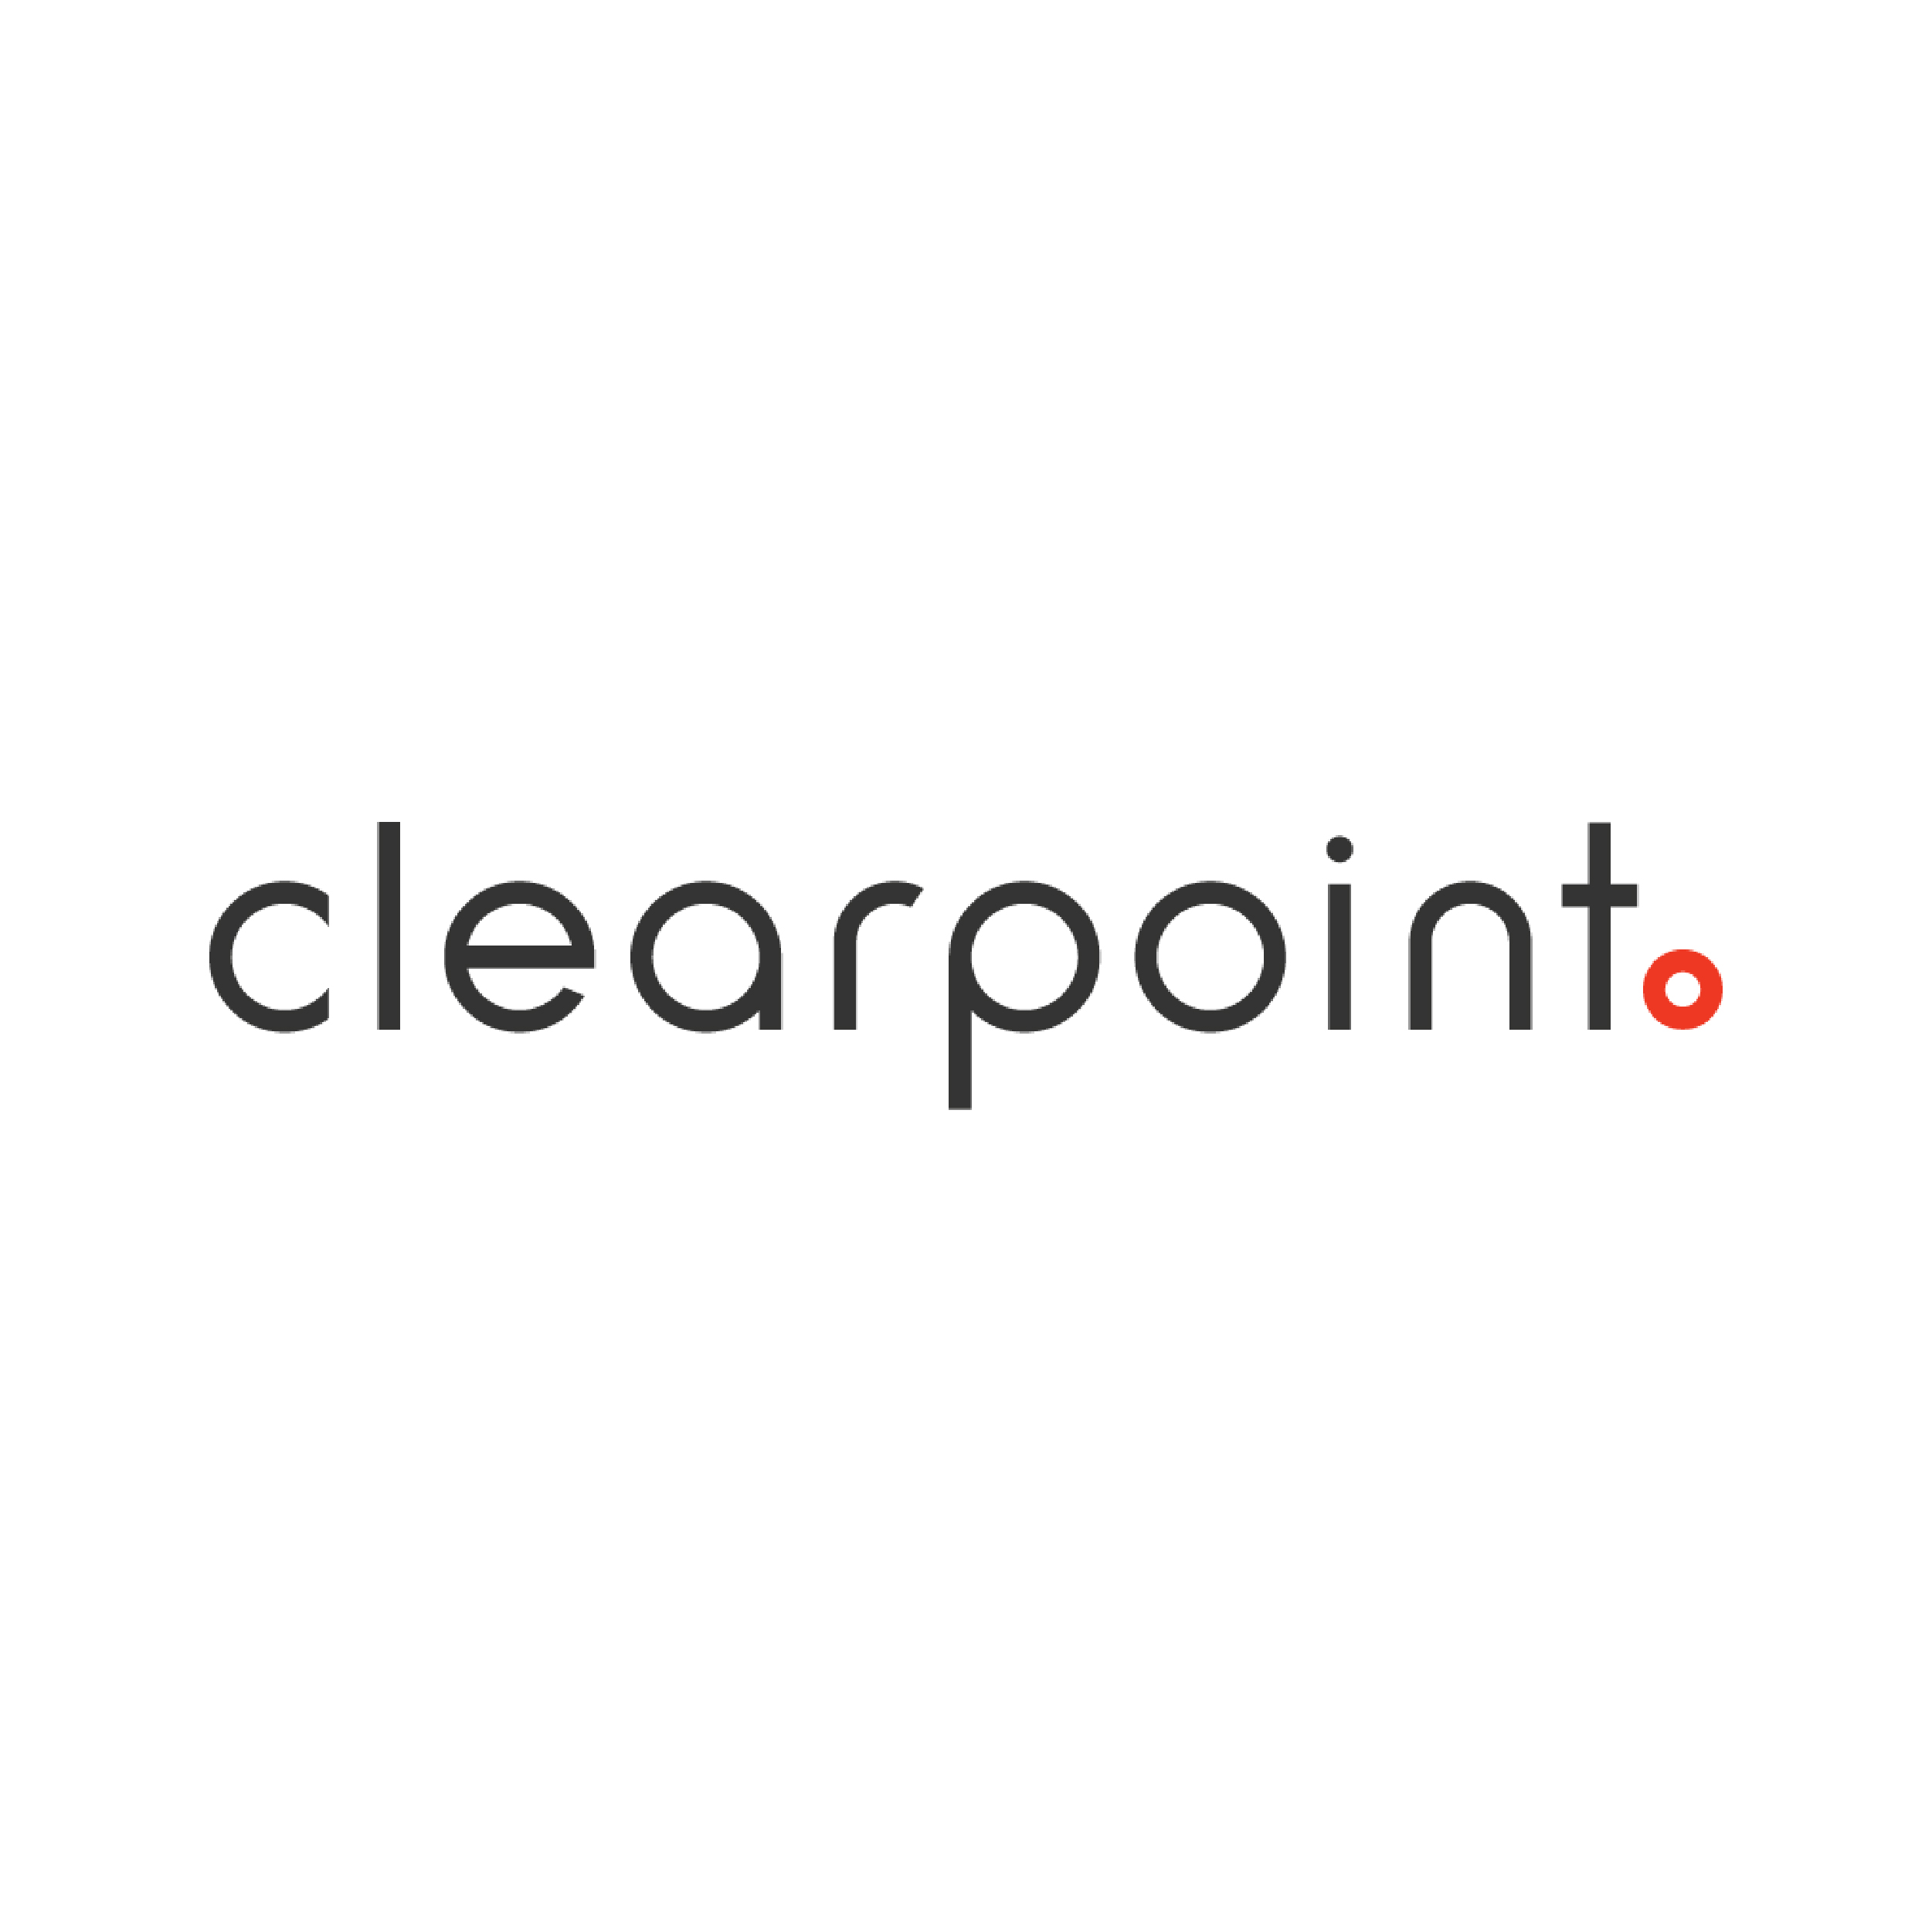 Clearpoint logo 